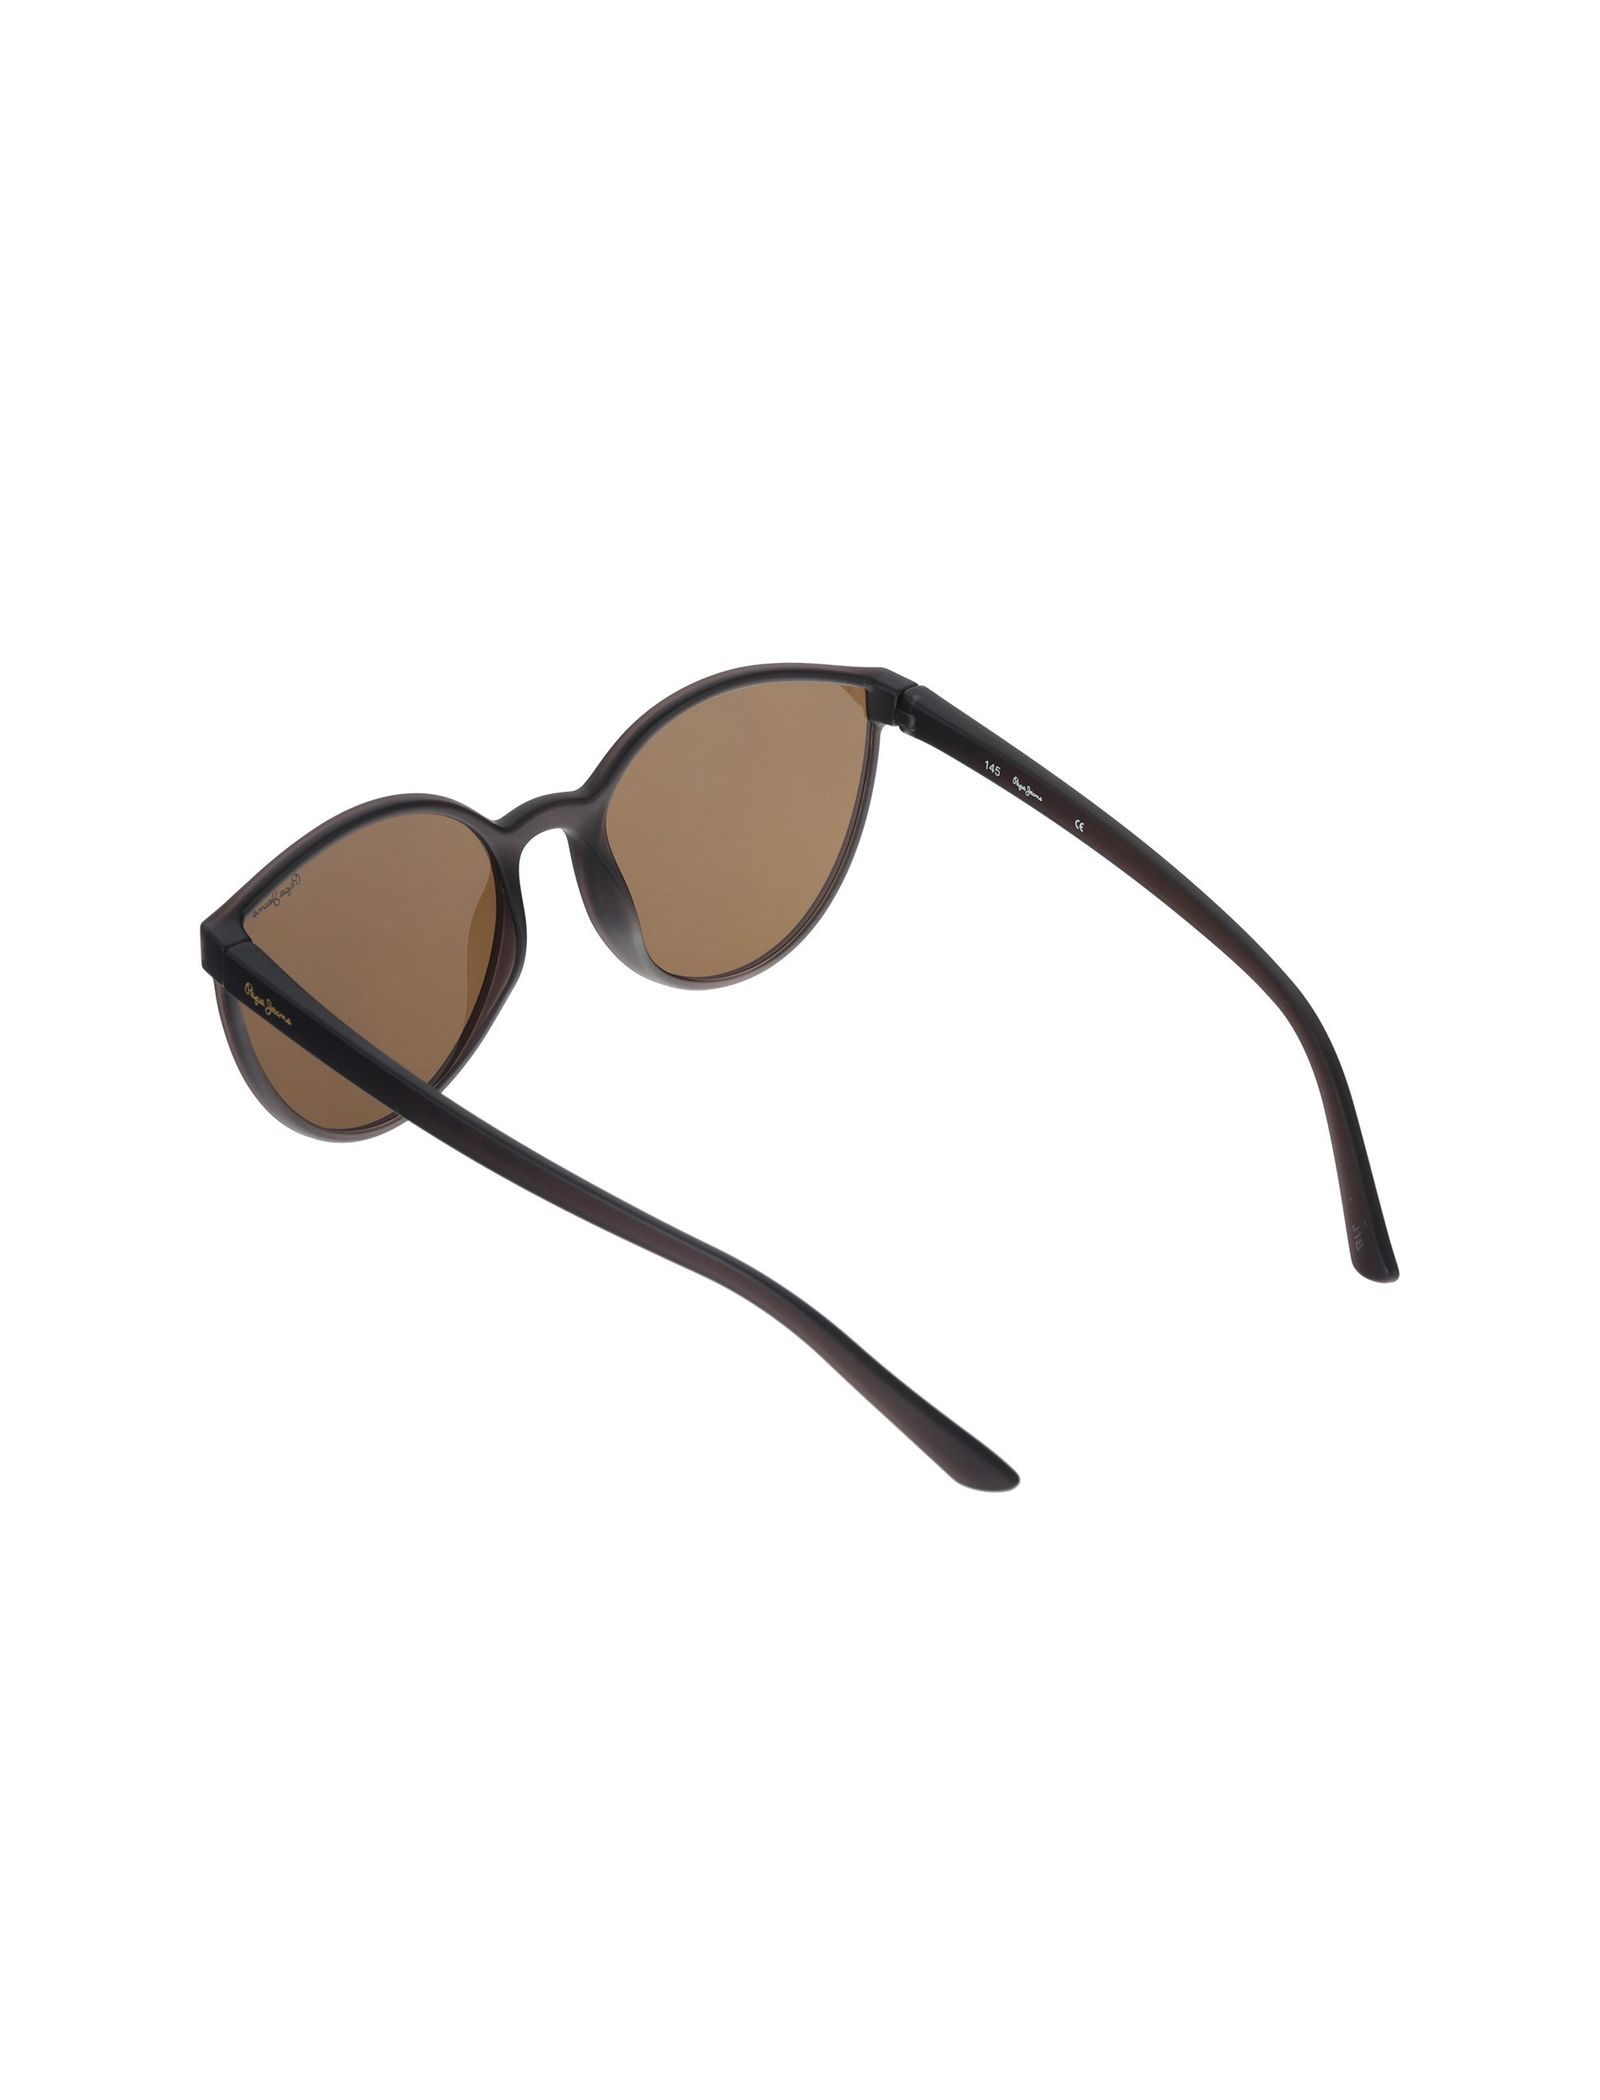 عینک آفتابی پروانه ای زنانه - پپه جینز - زغالي - 5